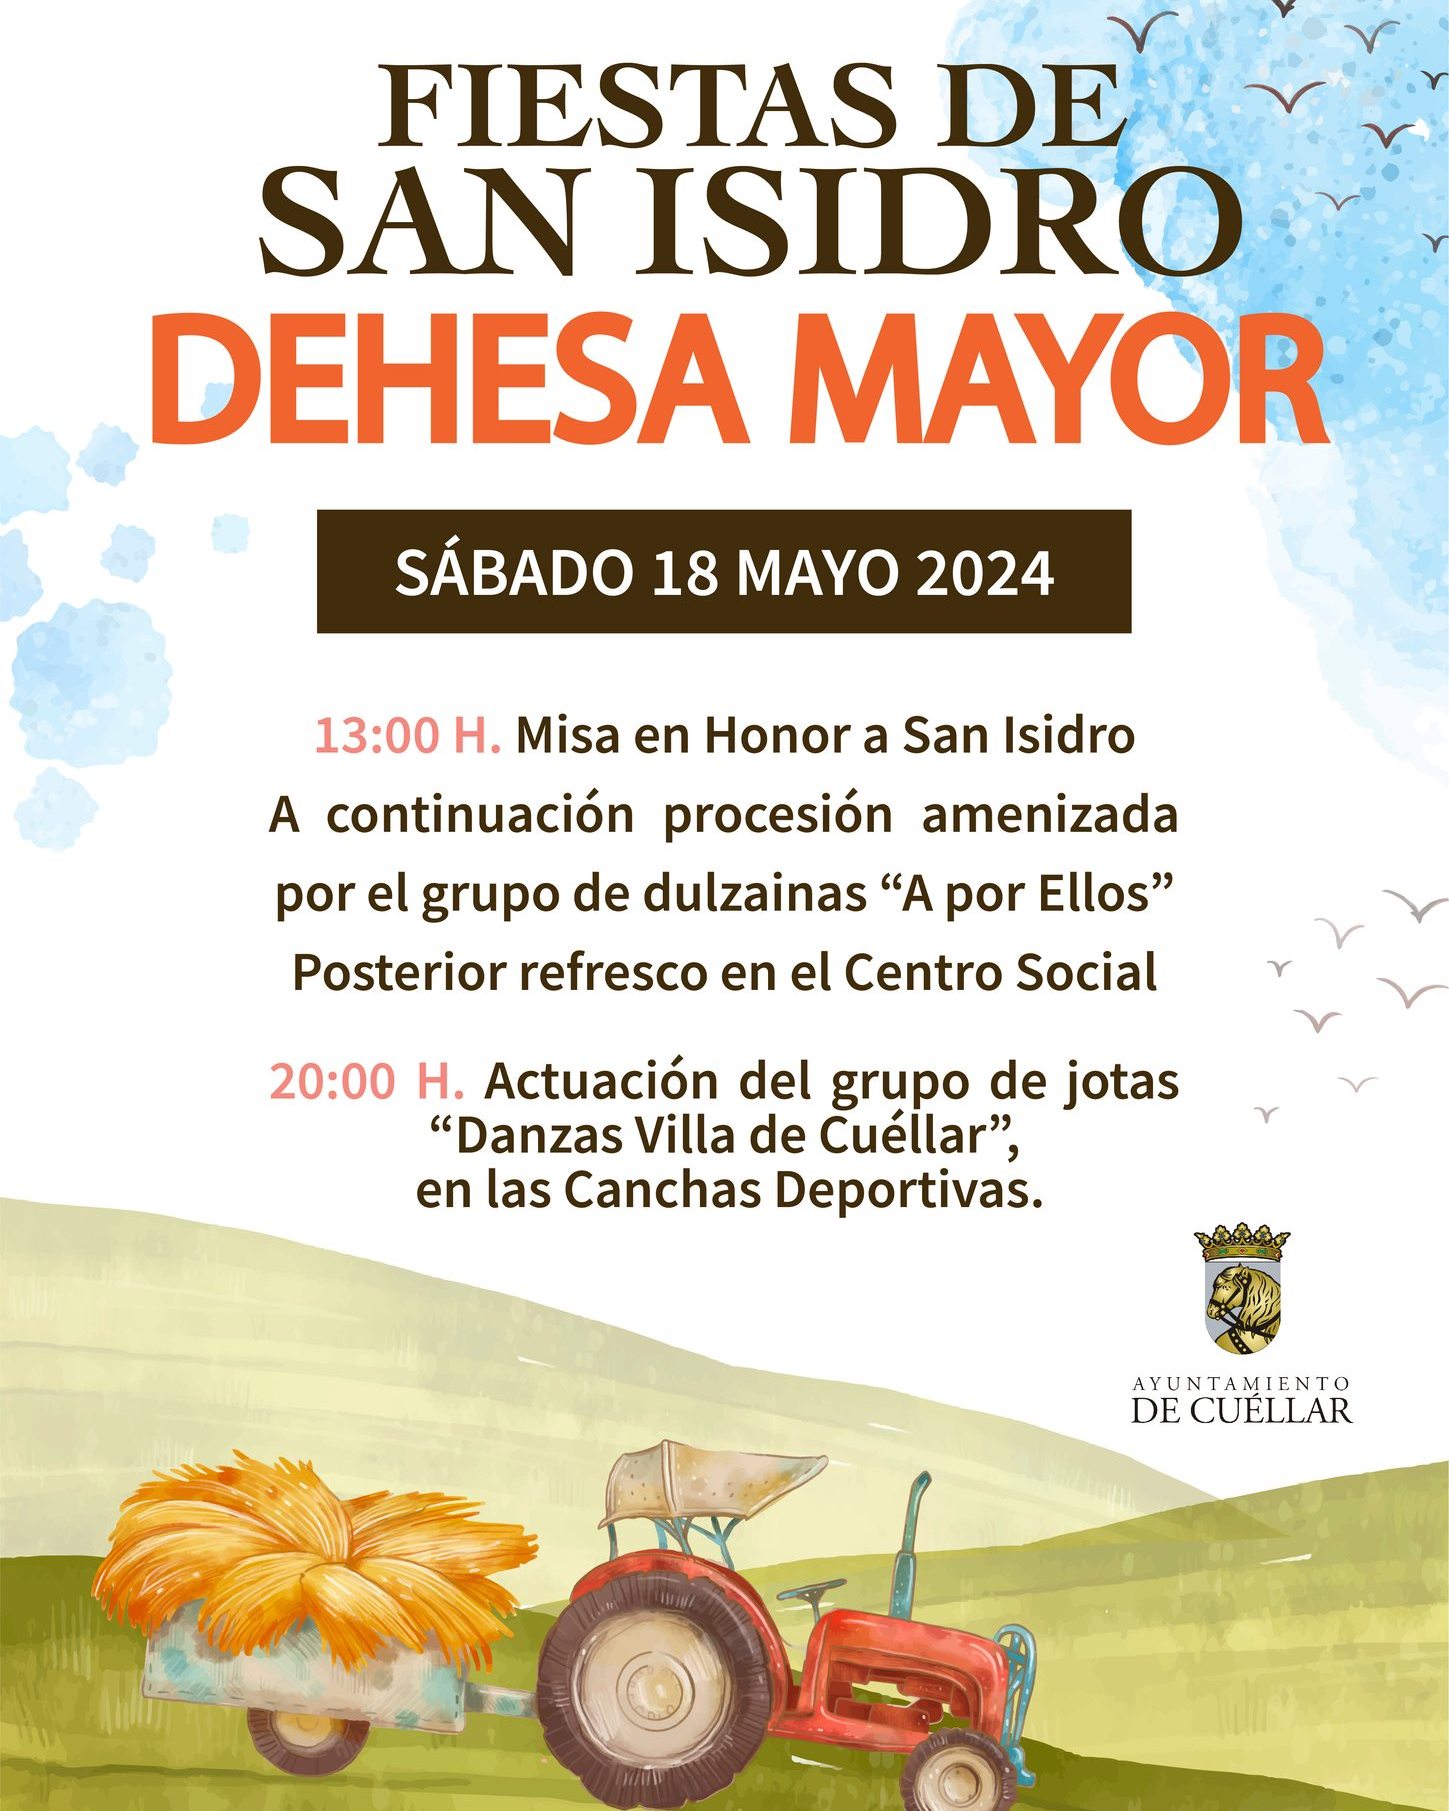 Fiestas_de_San_Isidro_de_Dehesa_Mayor_2024.jpg